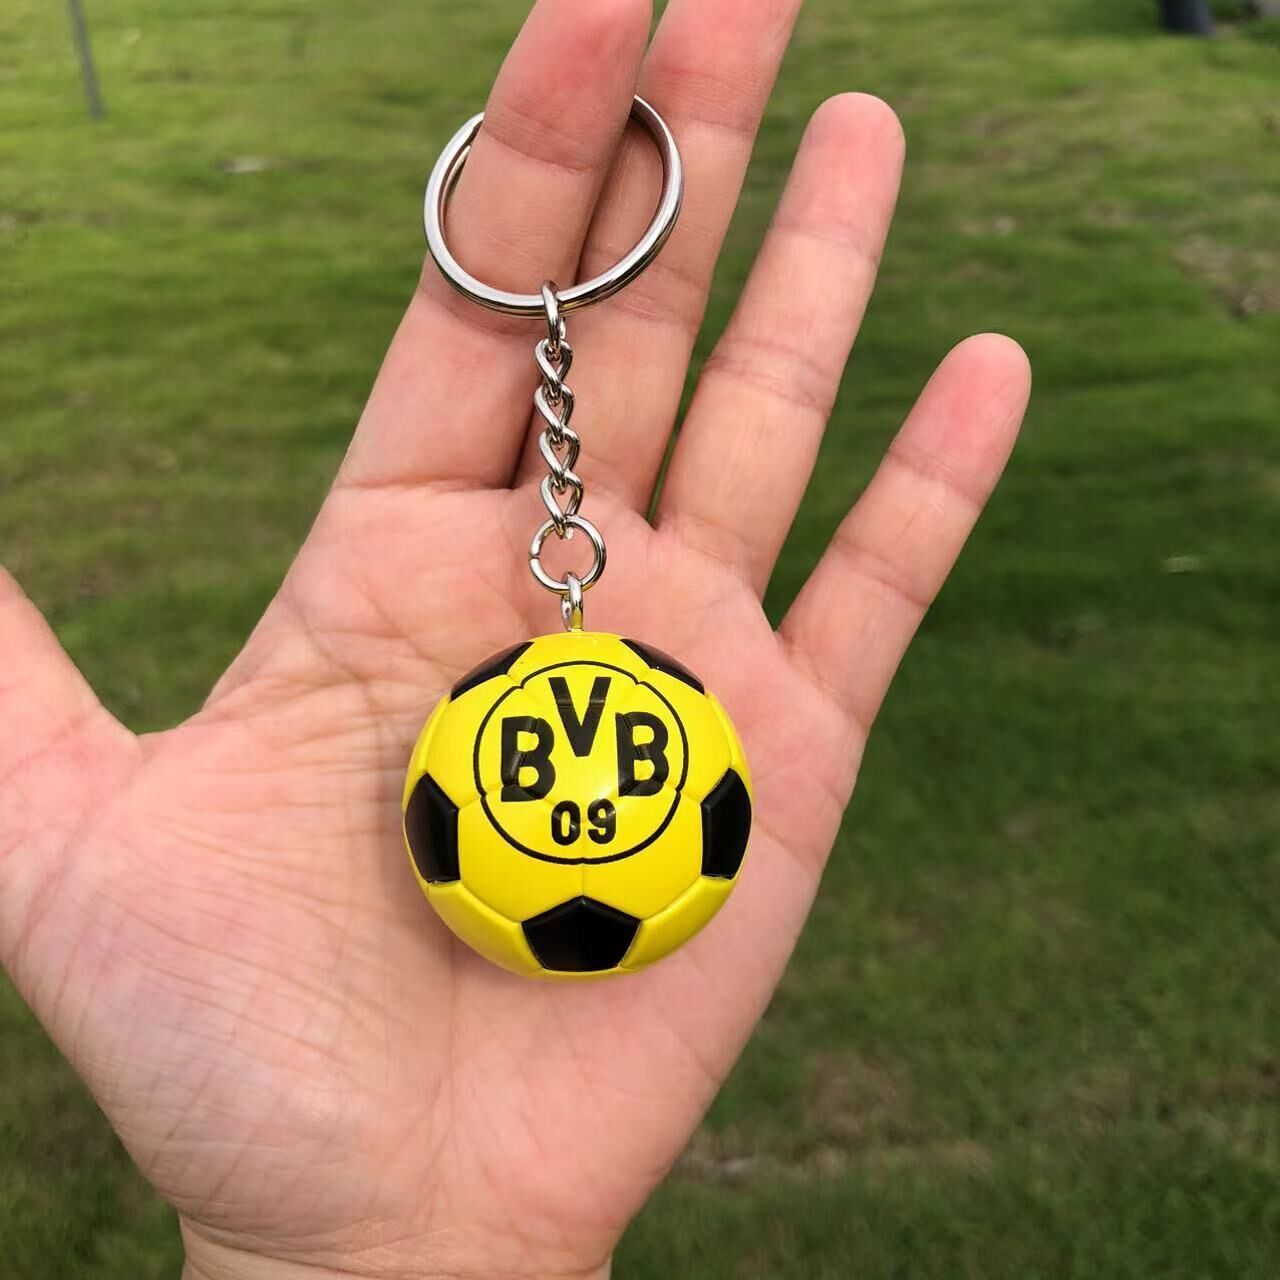 Sport Keychain - Football Keychains - Champions League - Soccer Teams Key Chain